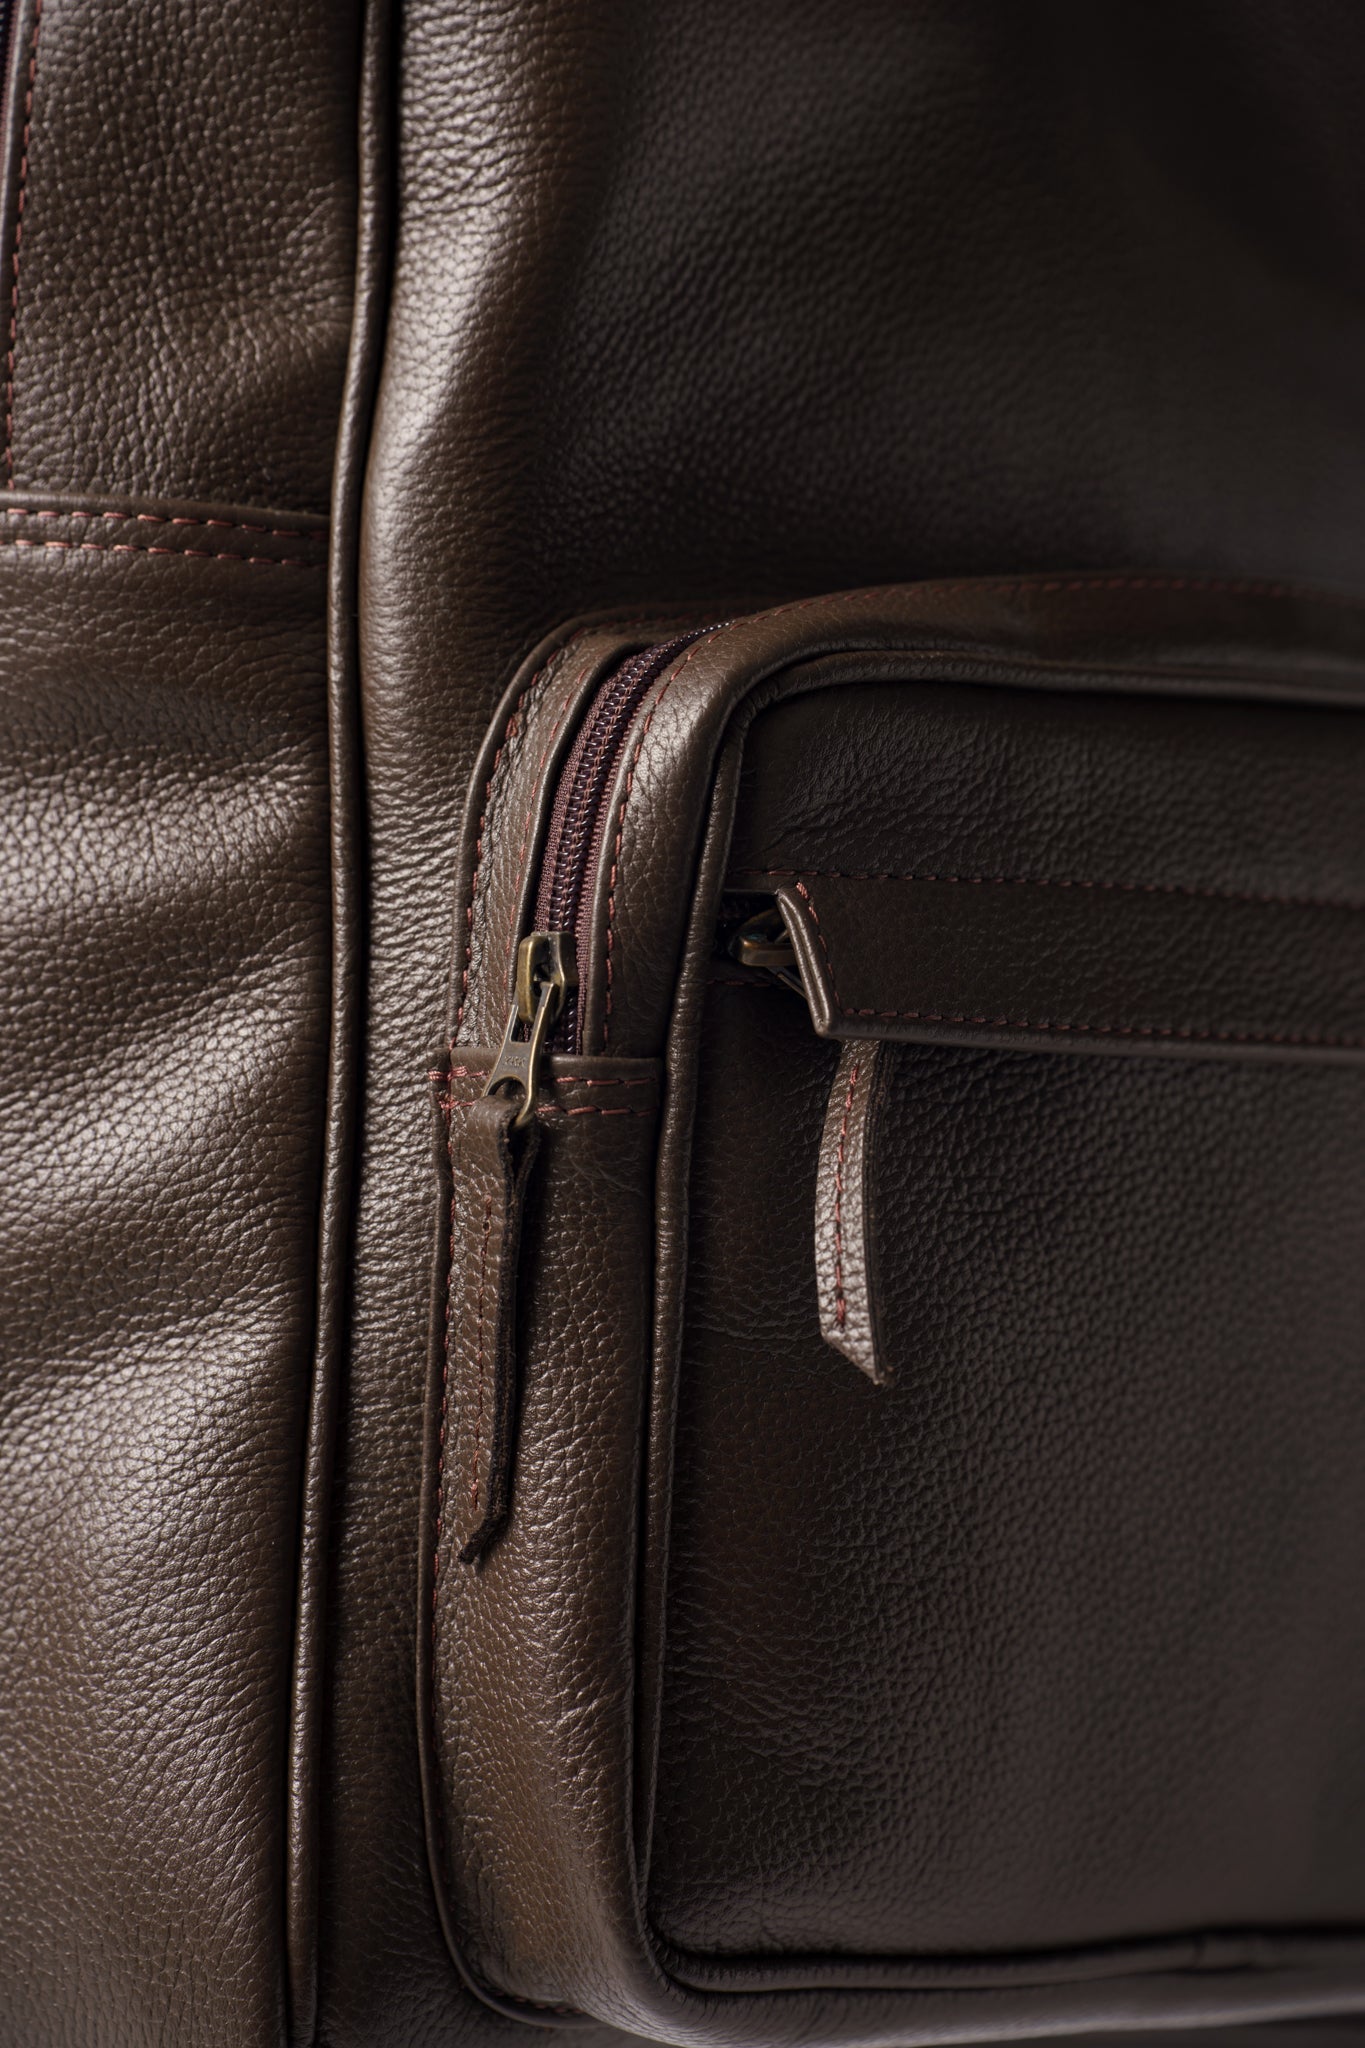 Close-up of Chamra's chocolate brown bag's front rectangular pocket.